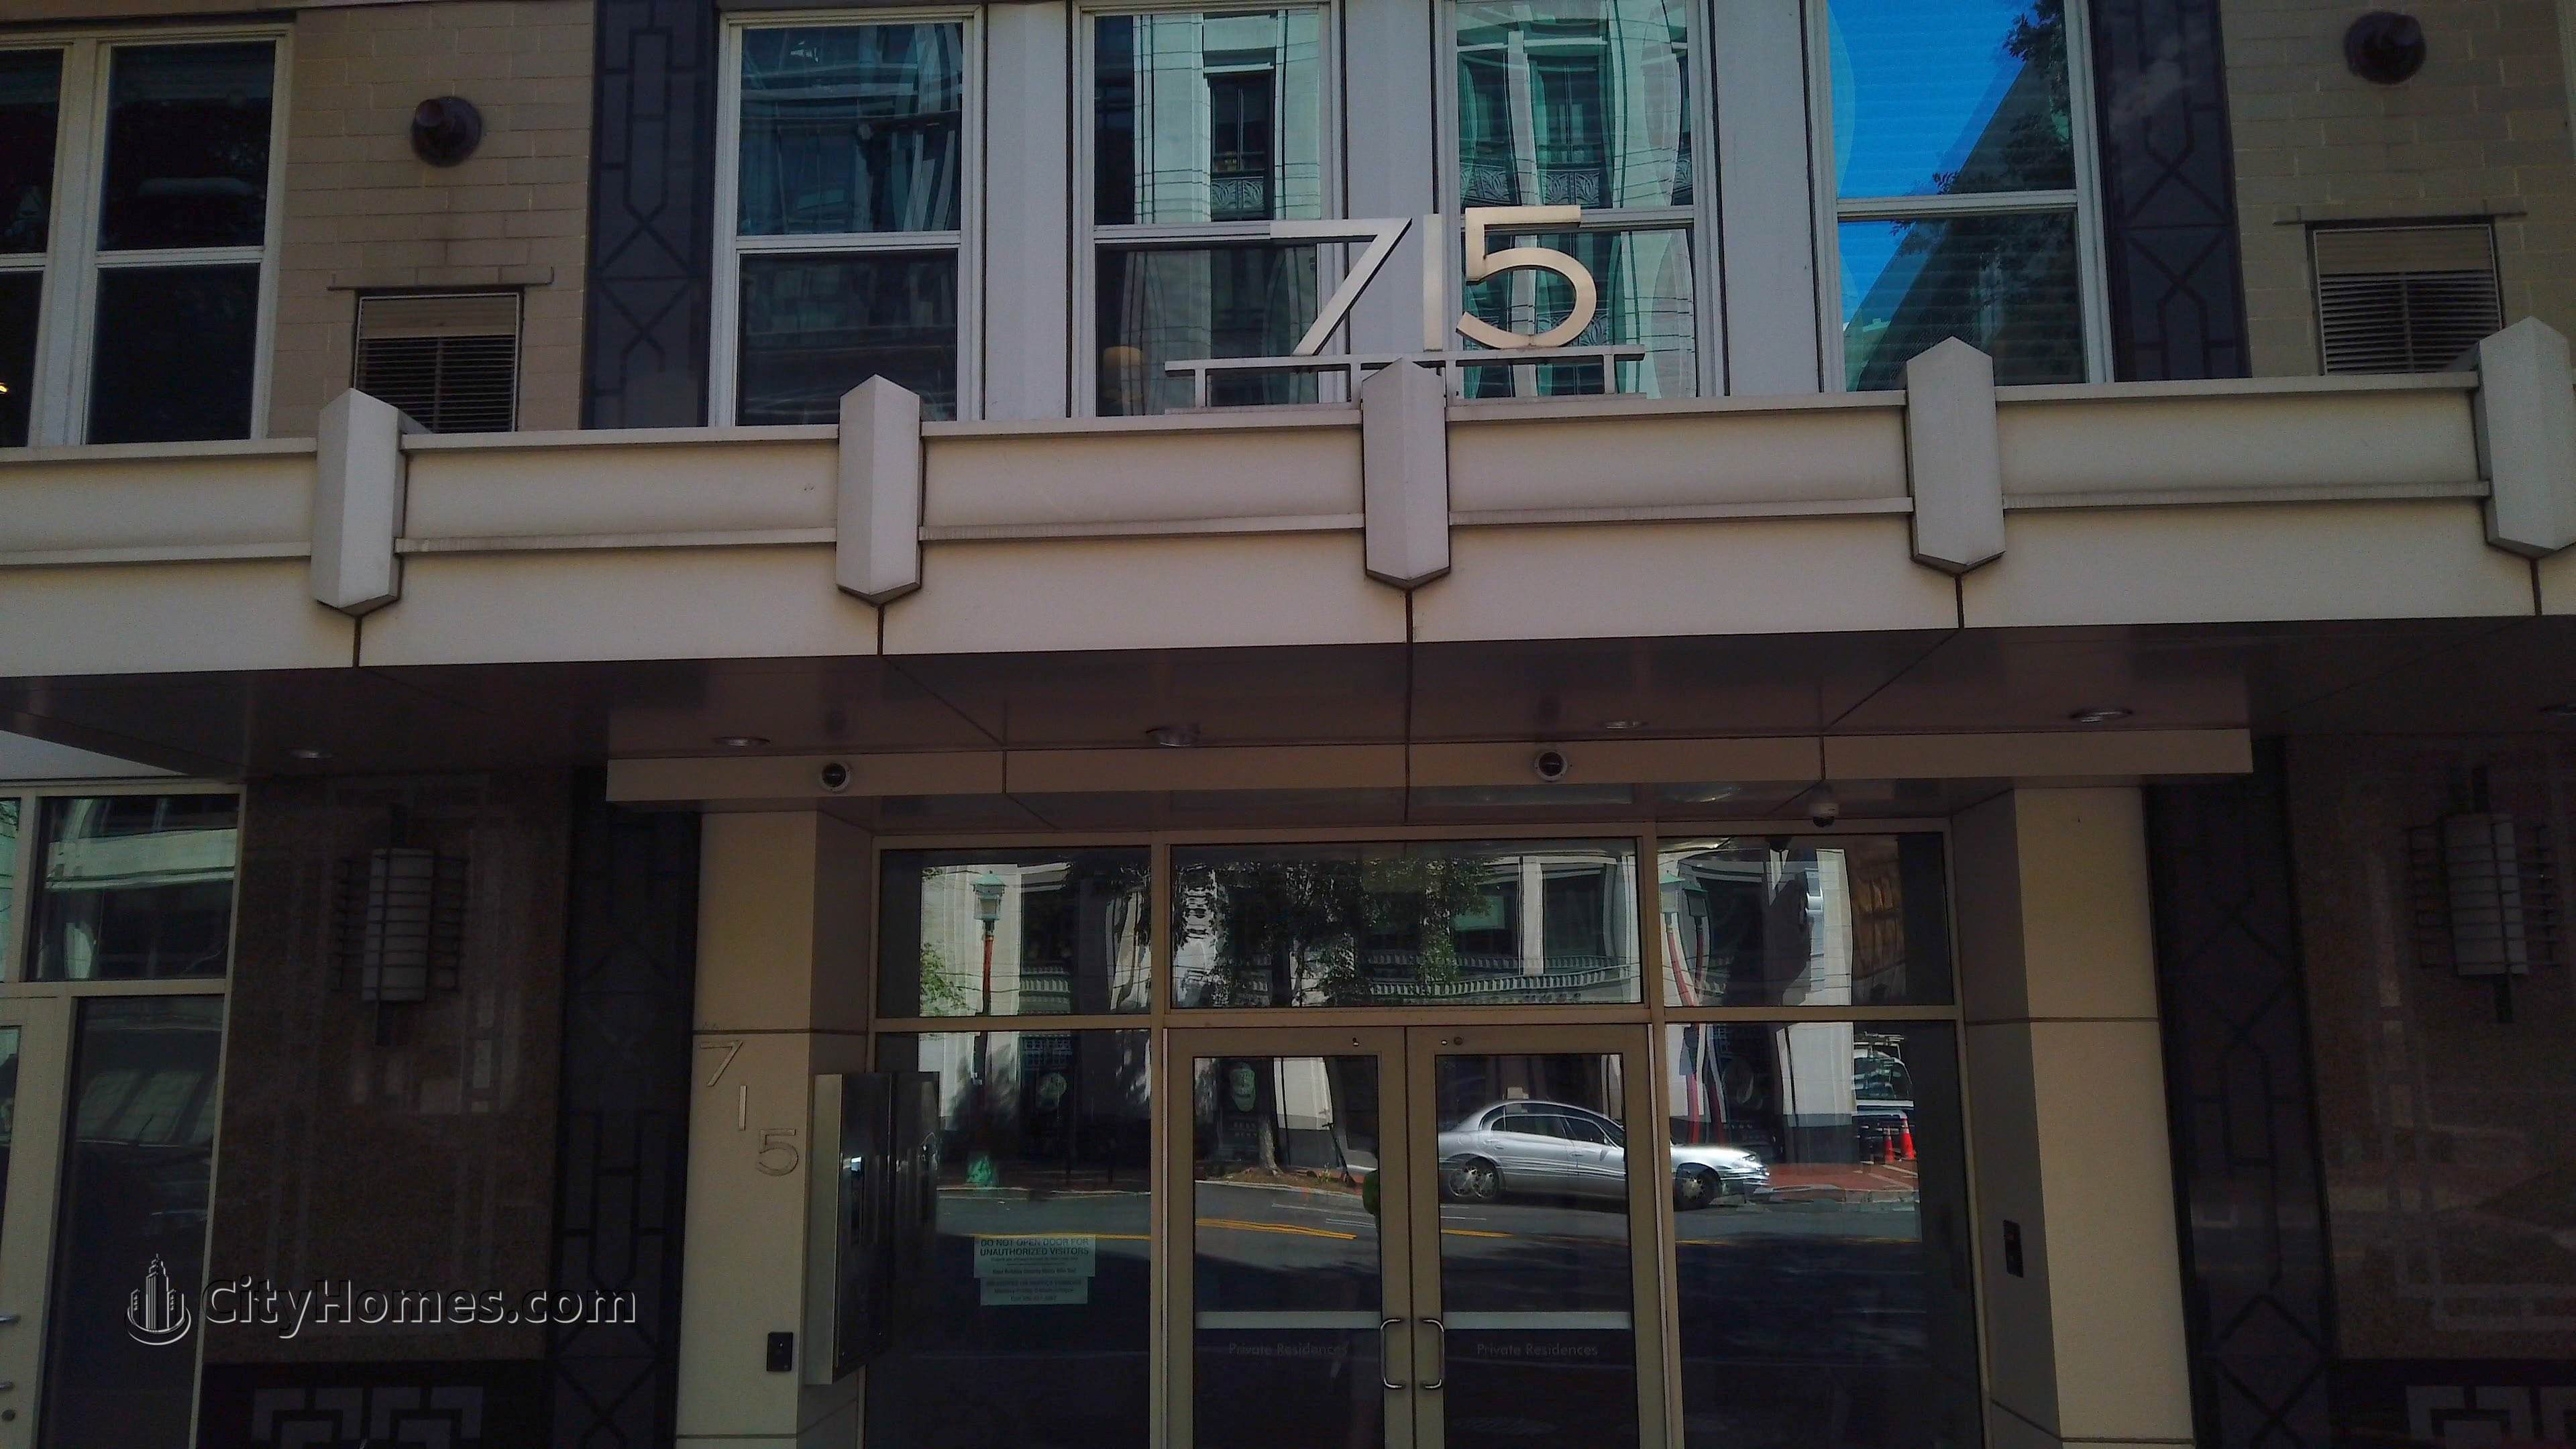 The Cosmopolitan здание в 715 6th St NW, Chinatown, Washington, DC 20001